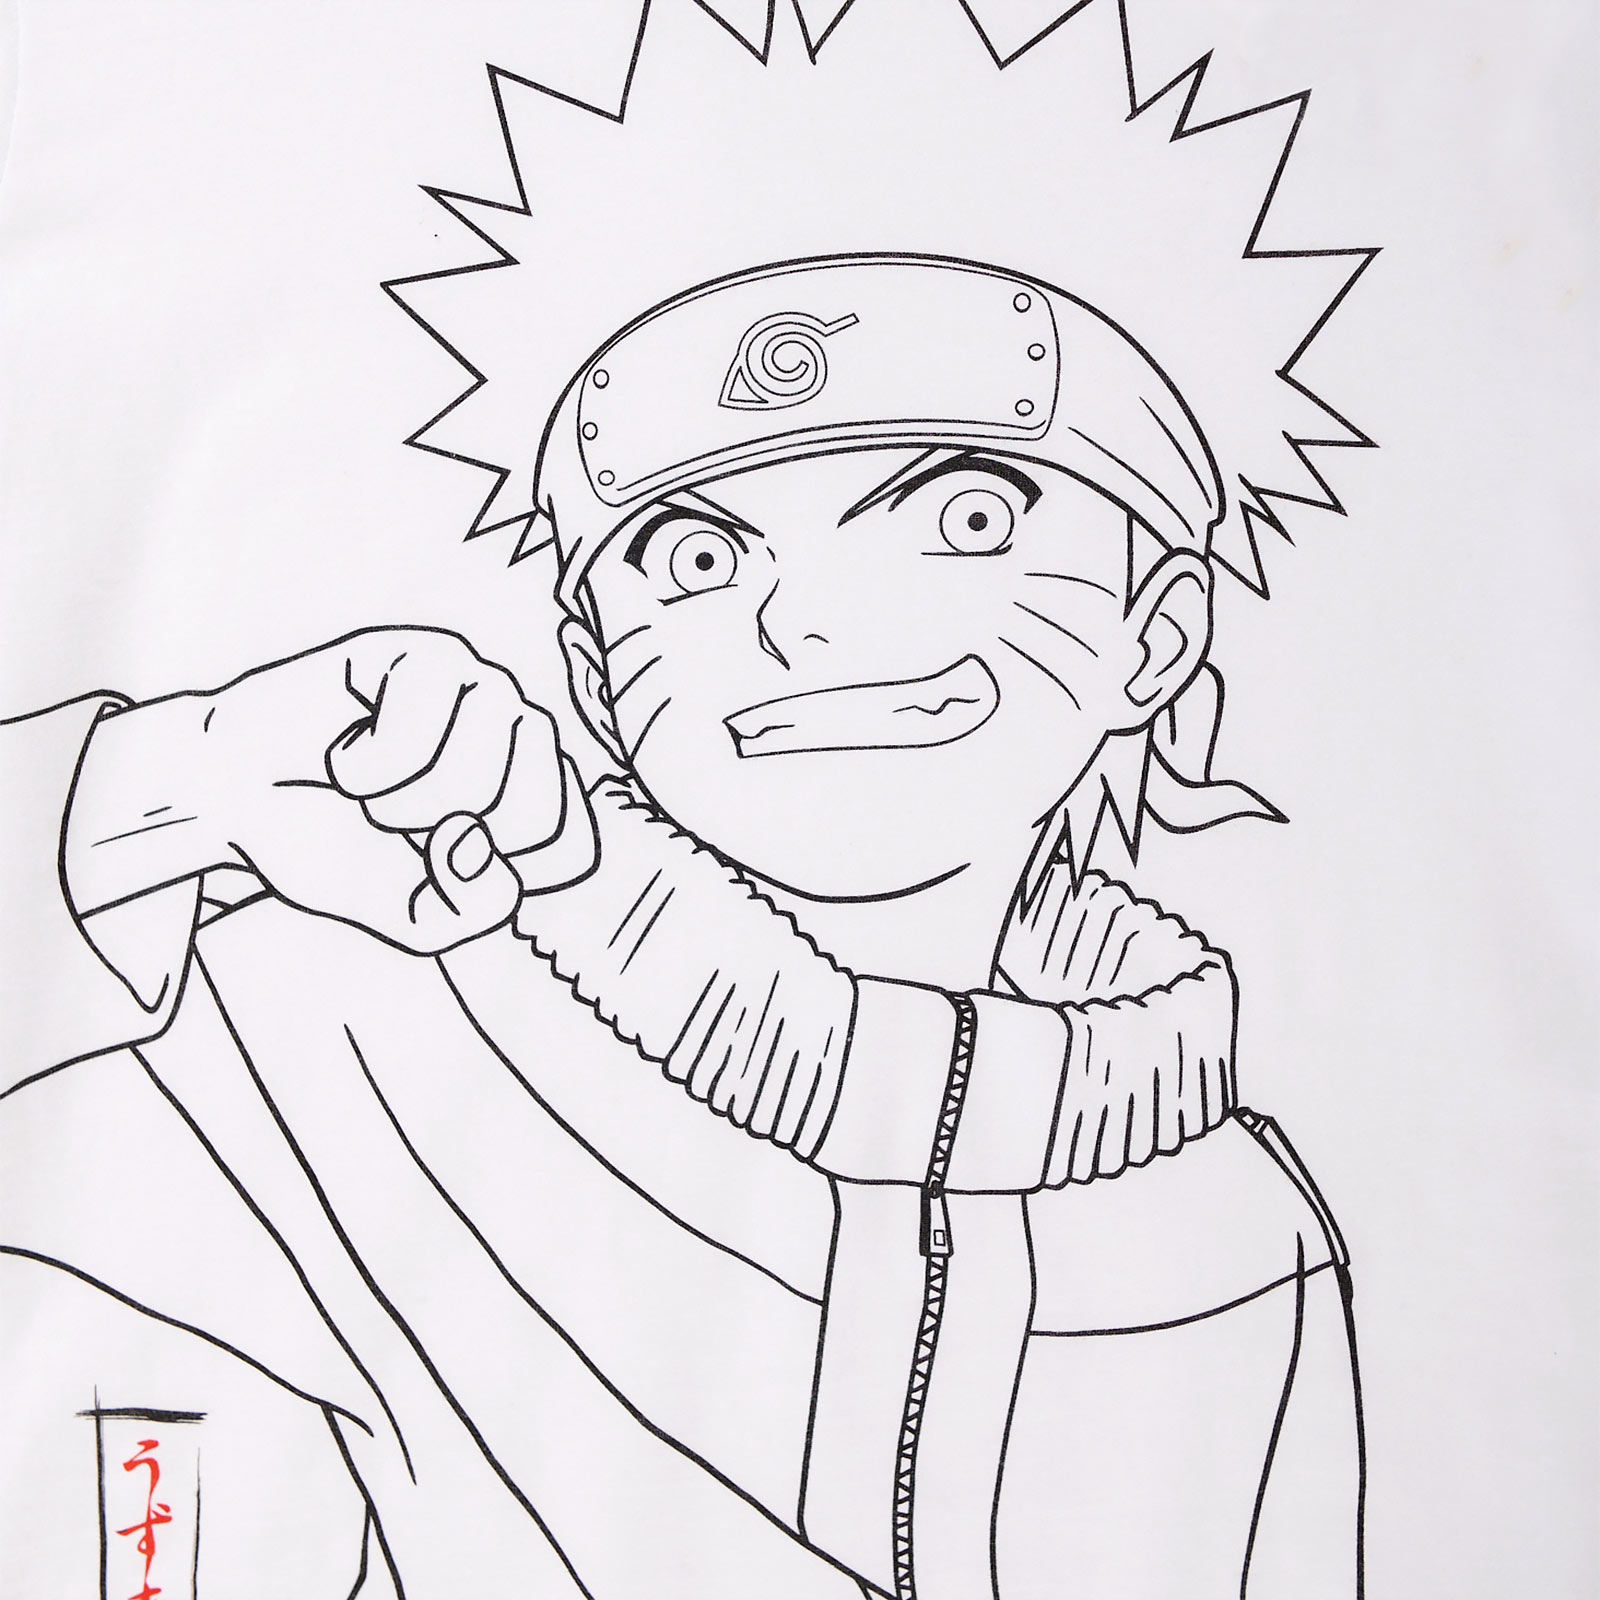 Naruto - Monochrome Sketch T-Shirt white